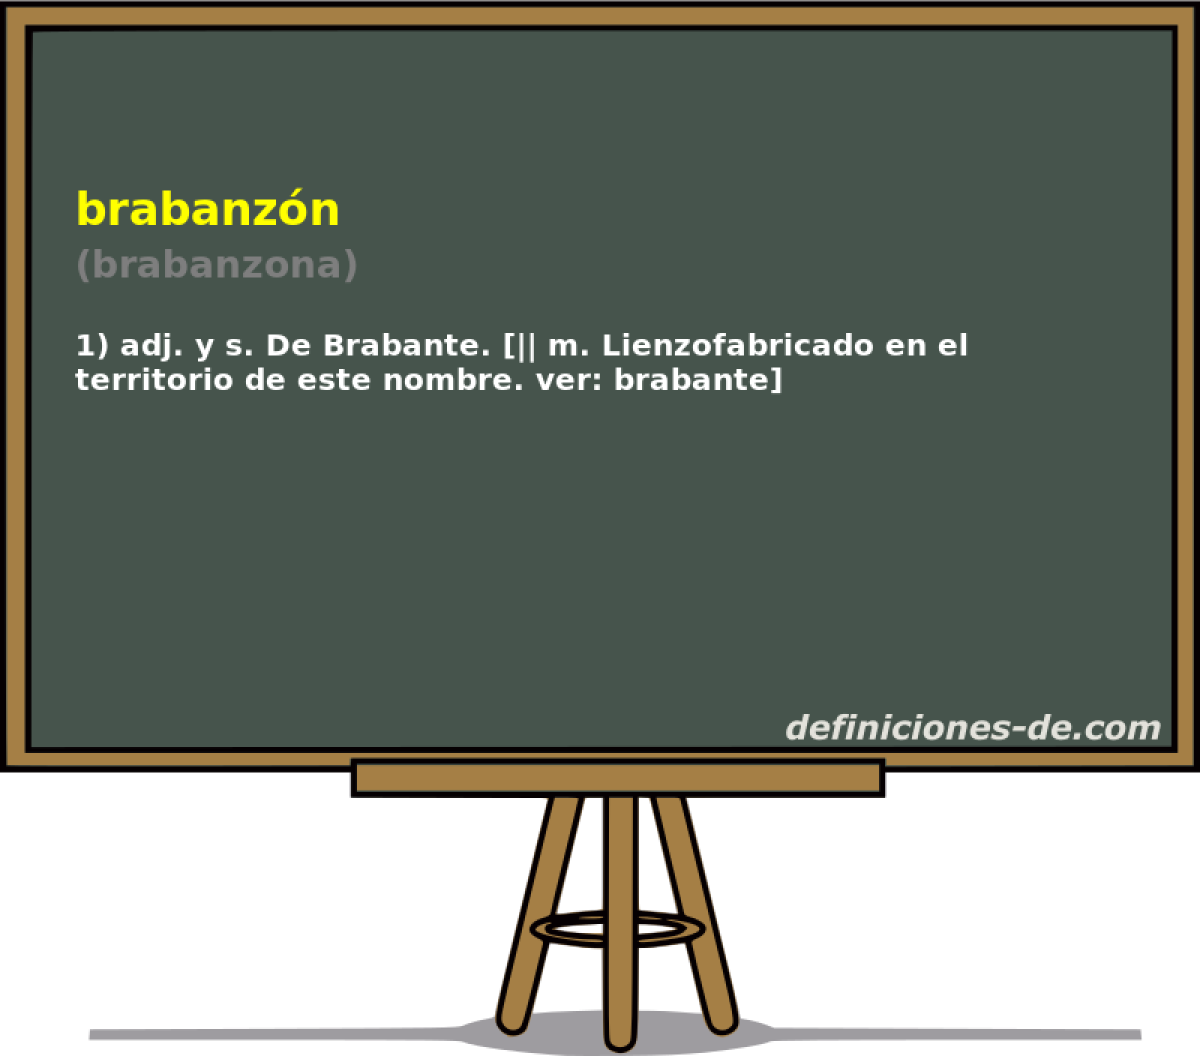 brabanzn (brabanzona)